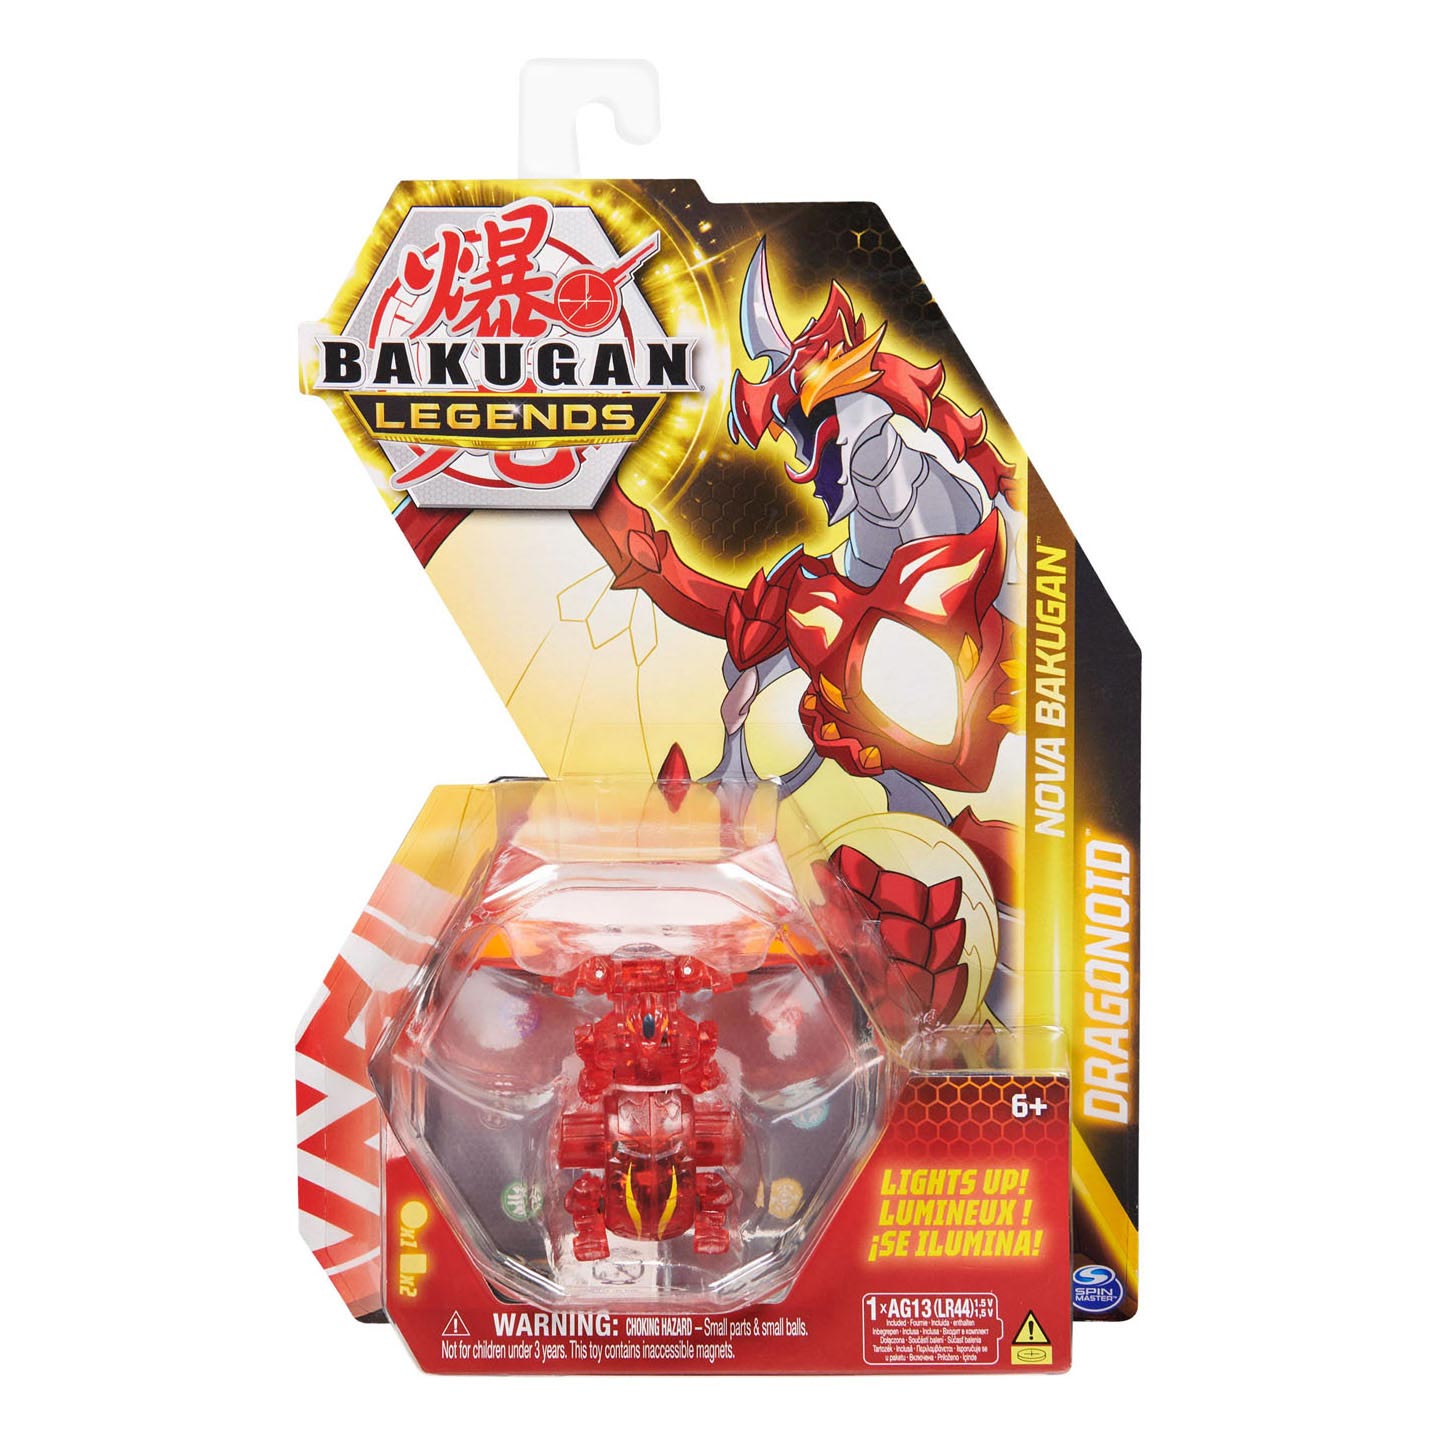 Bakugan Legends (S5) – Nova Basic Ball 1 Packung